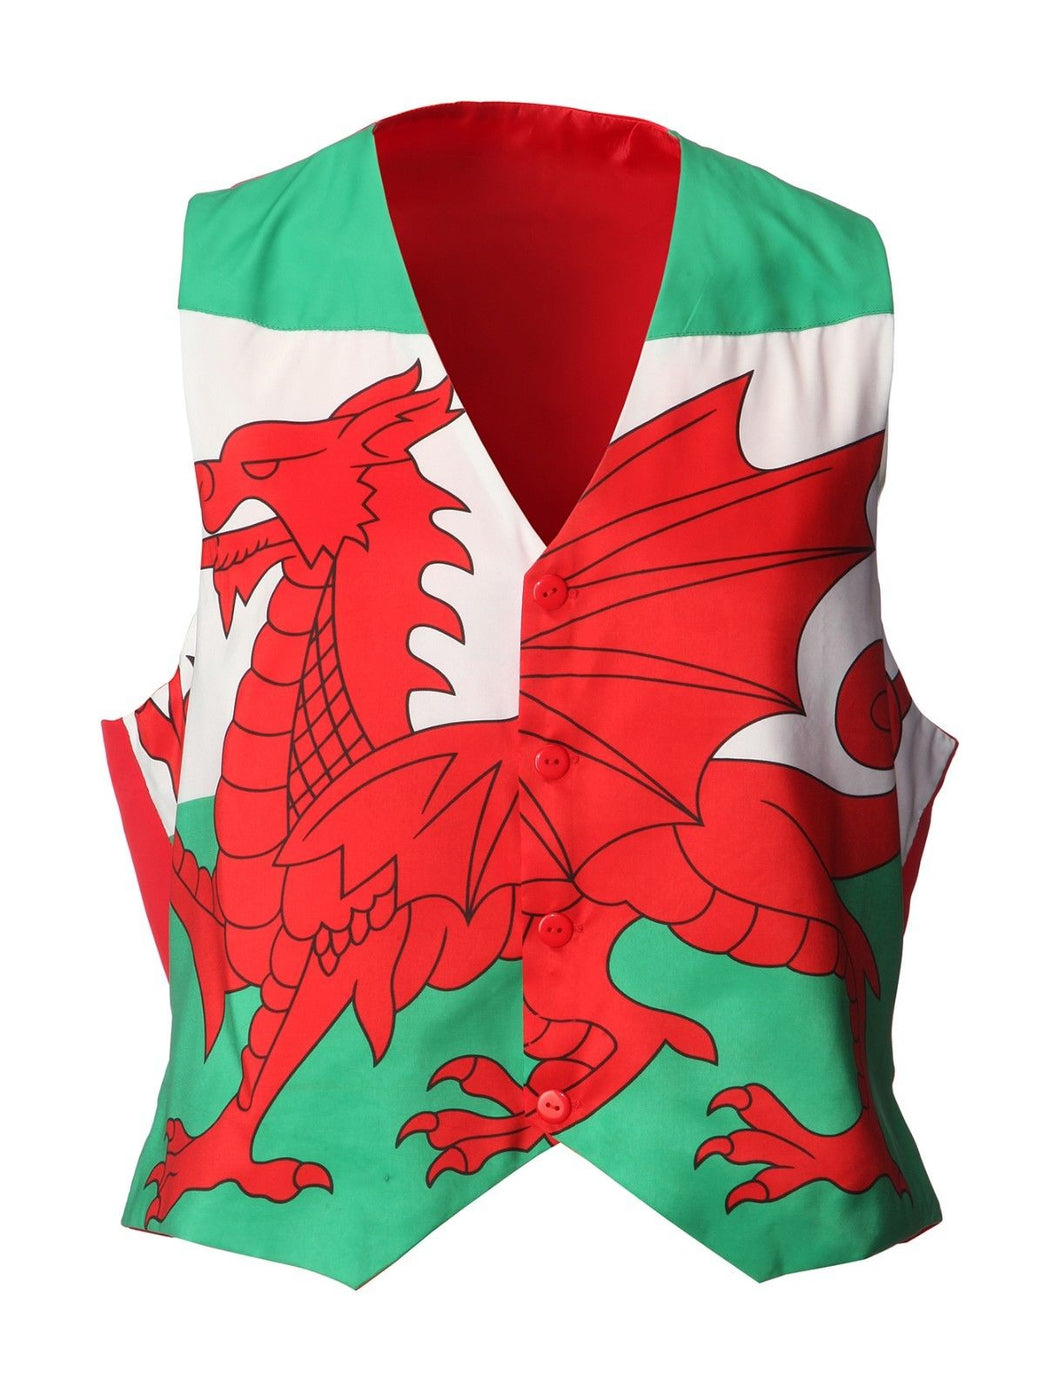 Wales Welsh Flag Patriotic Waistcoat